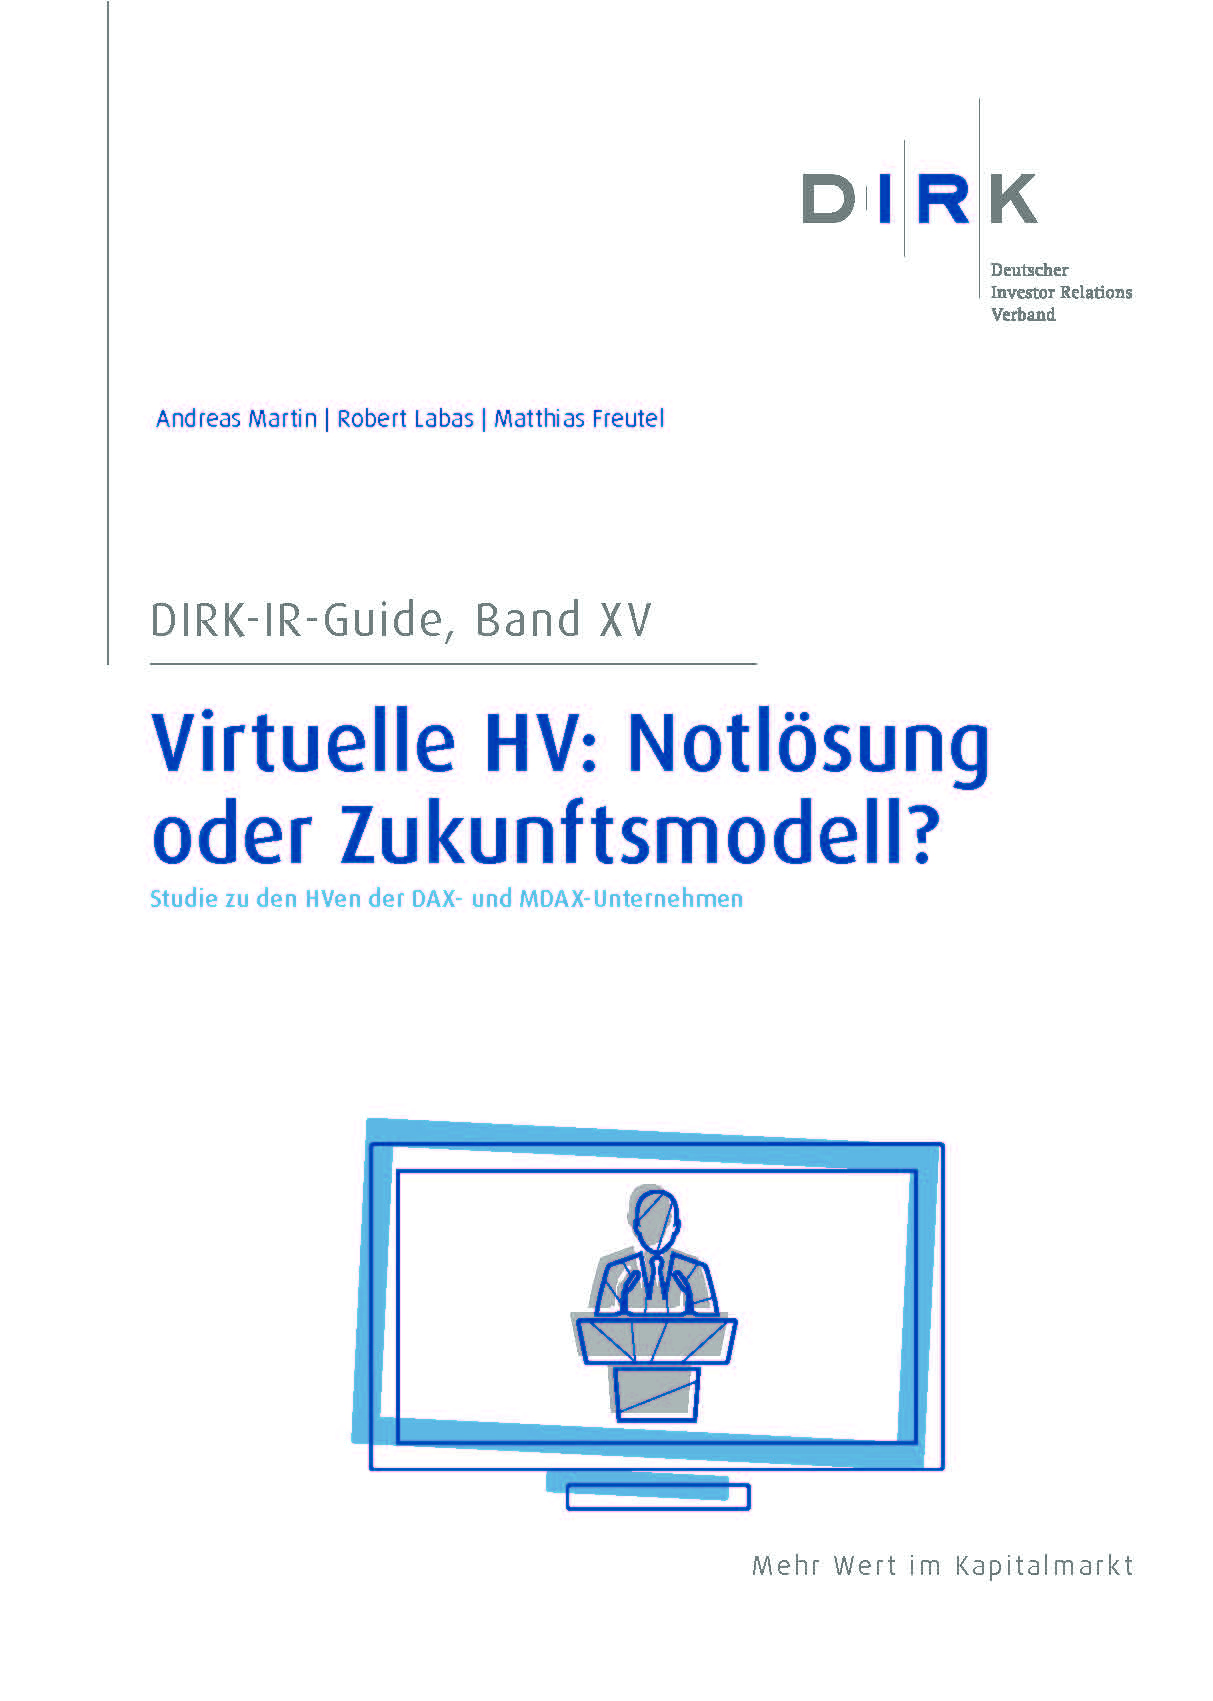 Gauly Advisors GmbH-Virtuelle HV: Notlösung oder Zukunftsmodell?